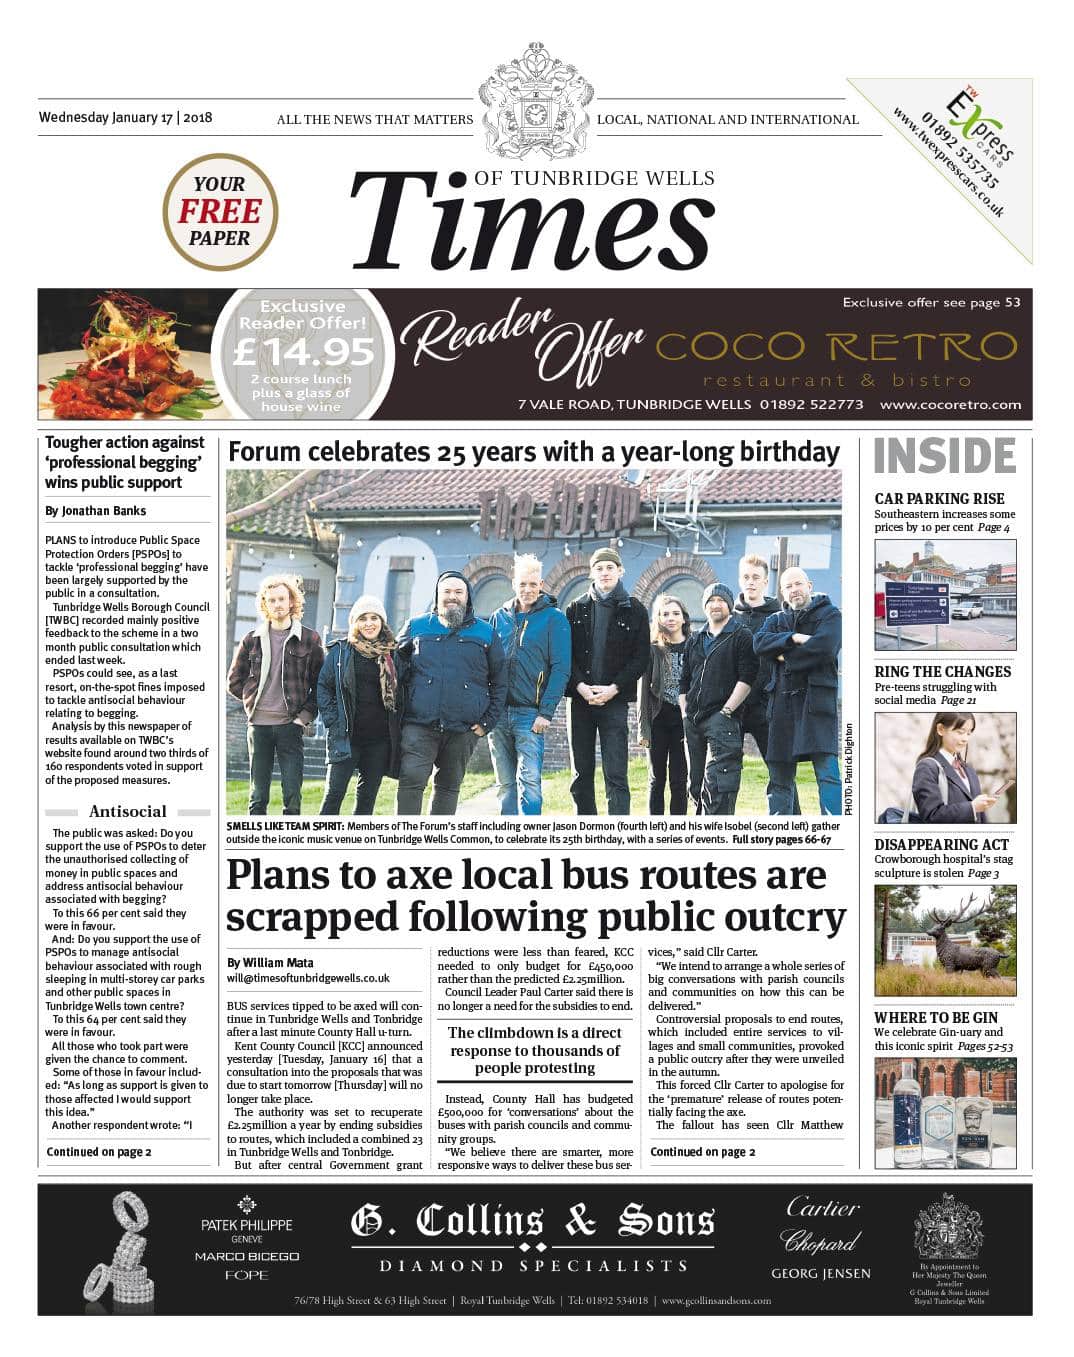 Read the Times of Tunbridge Wells 17th January 2018